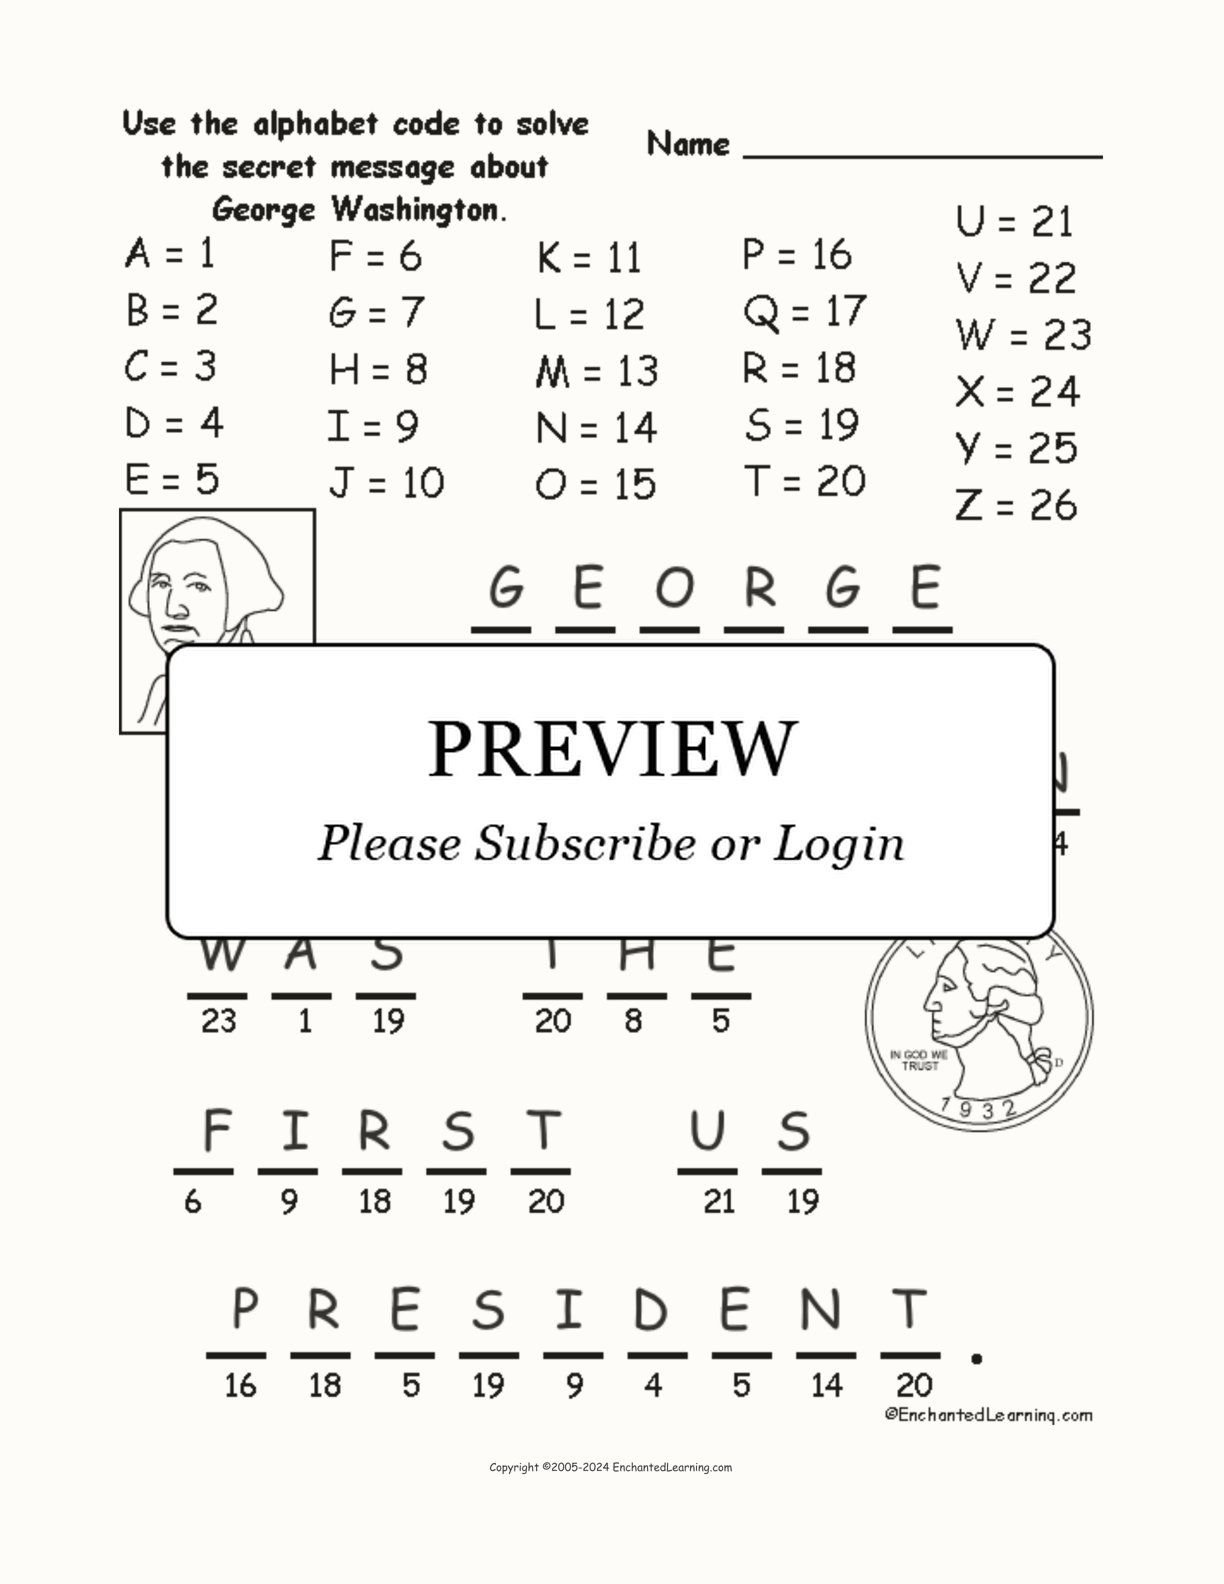 George Washington Alphabet Code interactive worksheet page 2